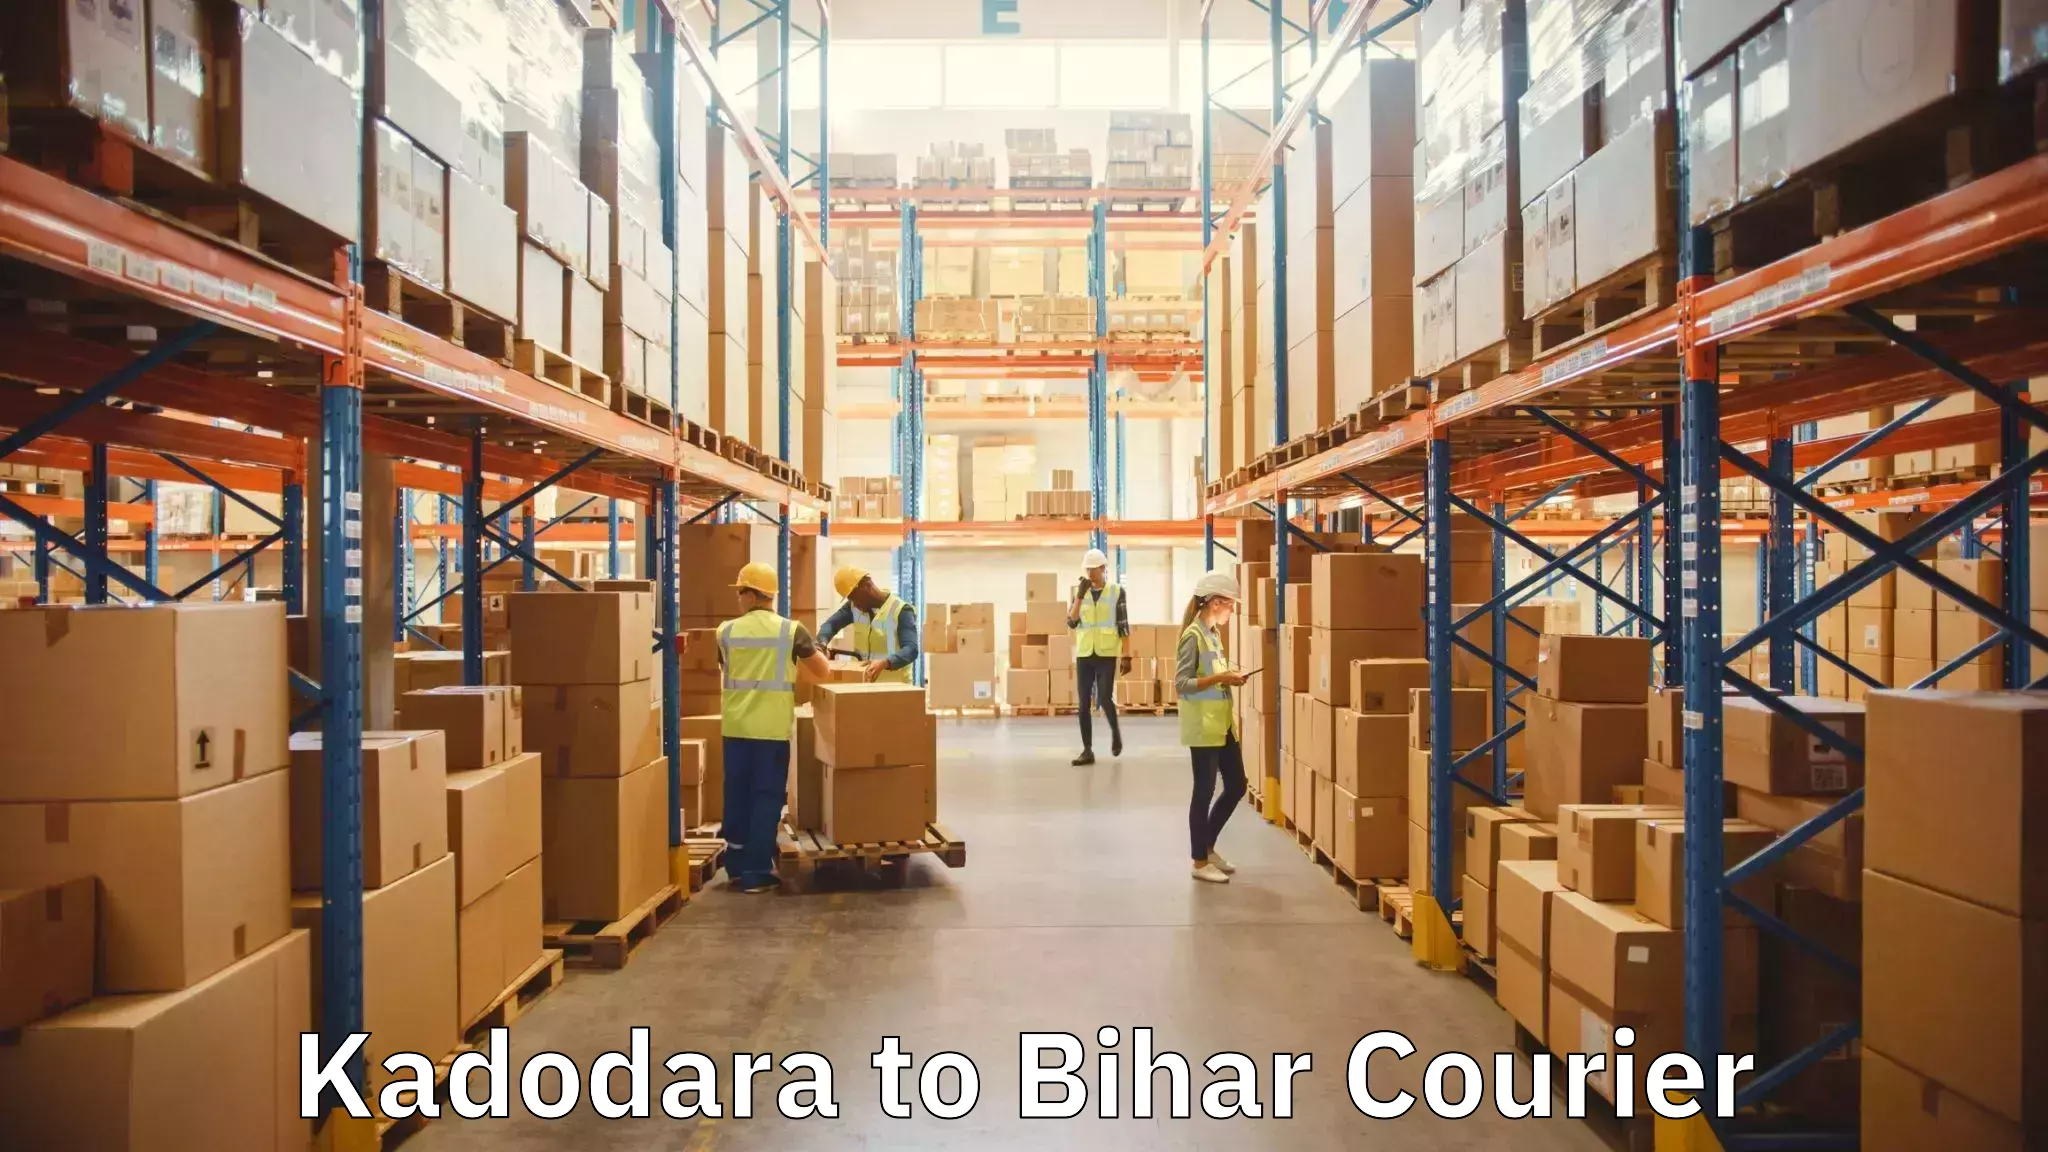 Moving and packing experts Kadodara to Bihar